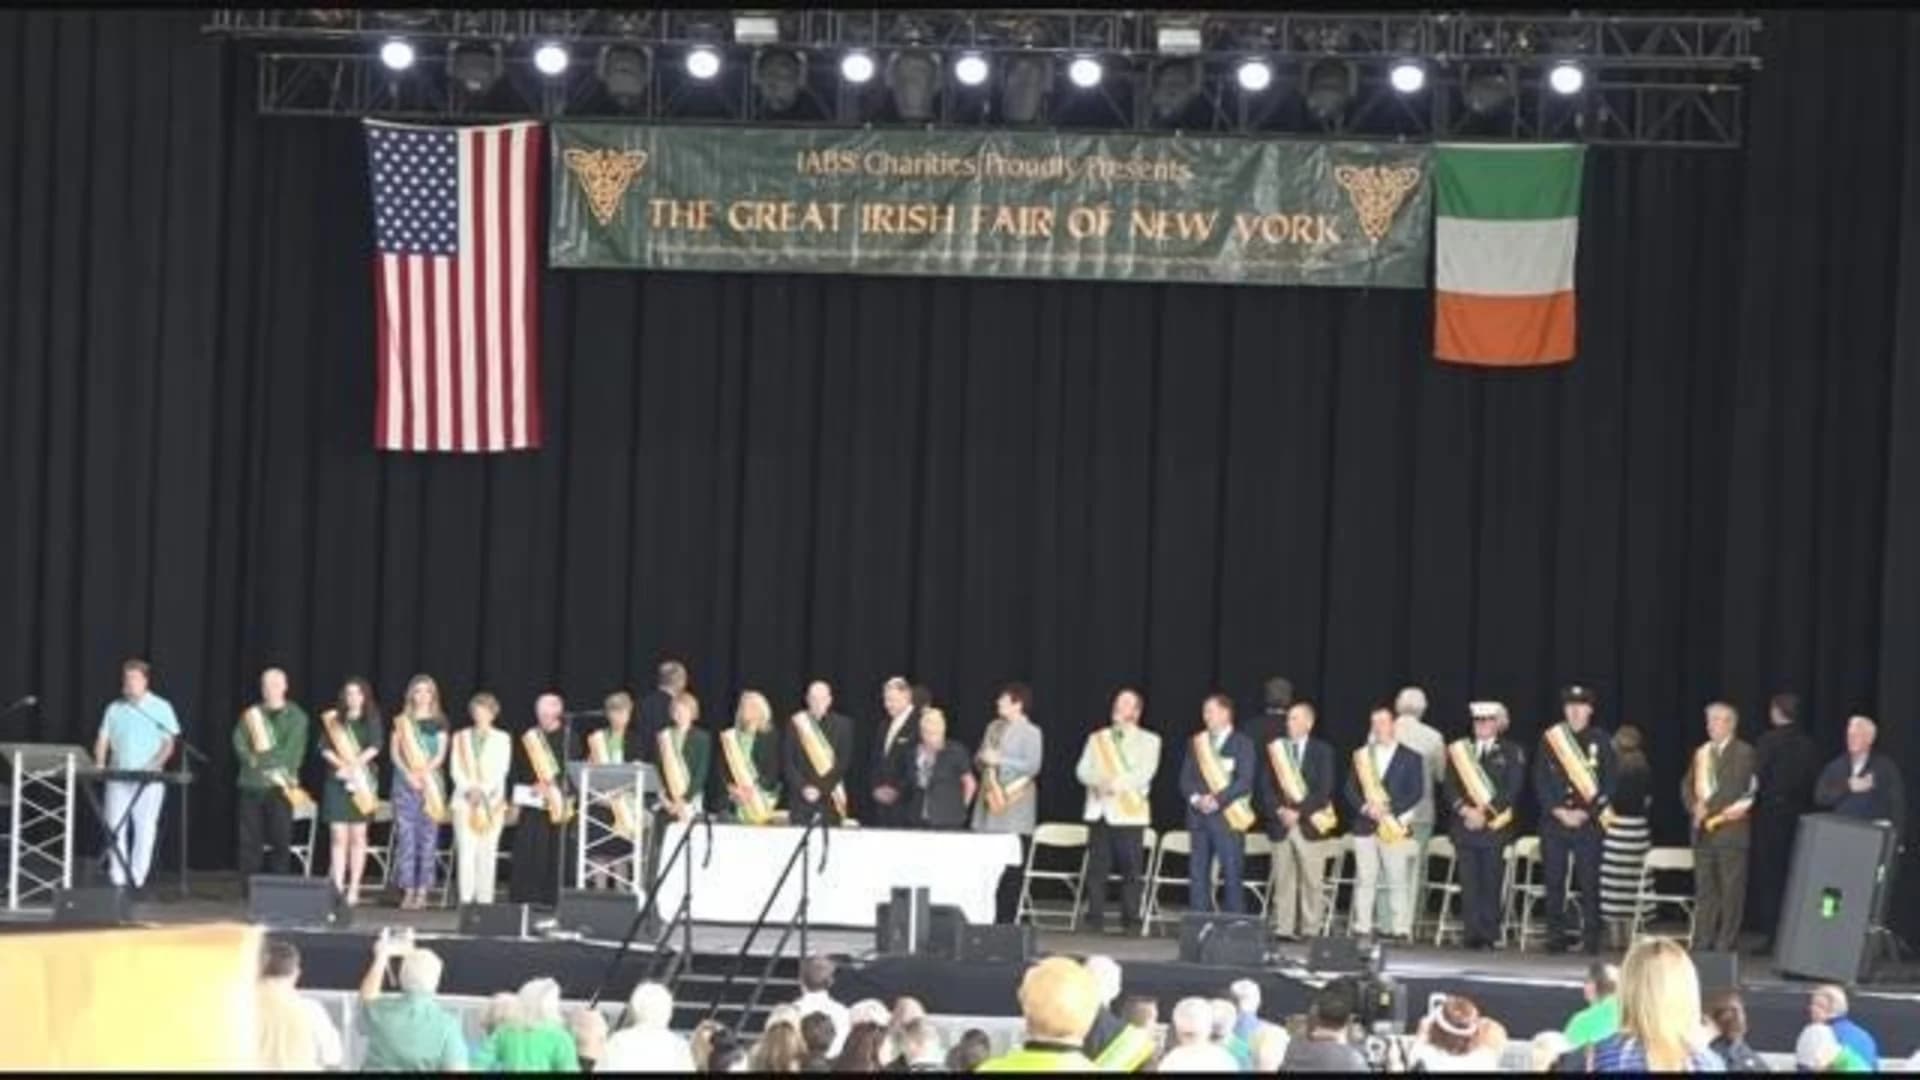 The Great Irish Fair of New York is held in Coney Island